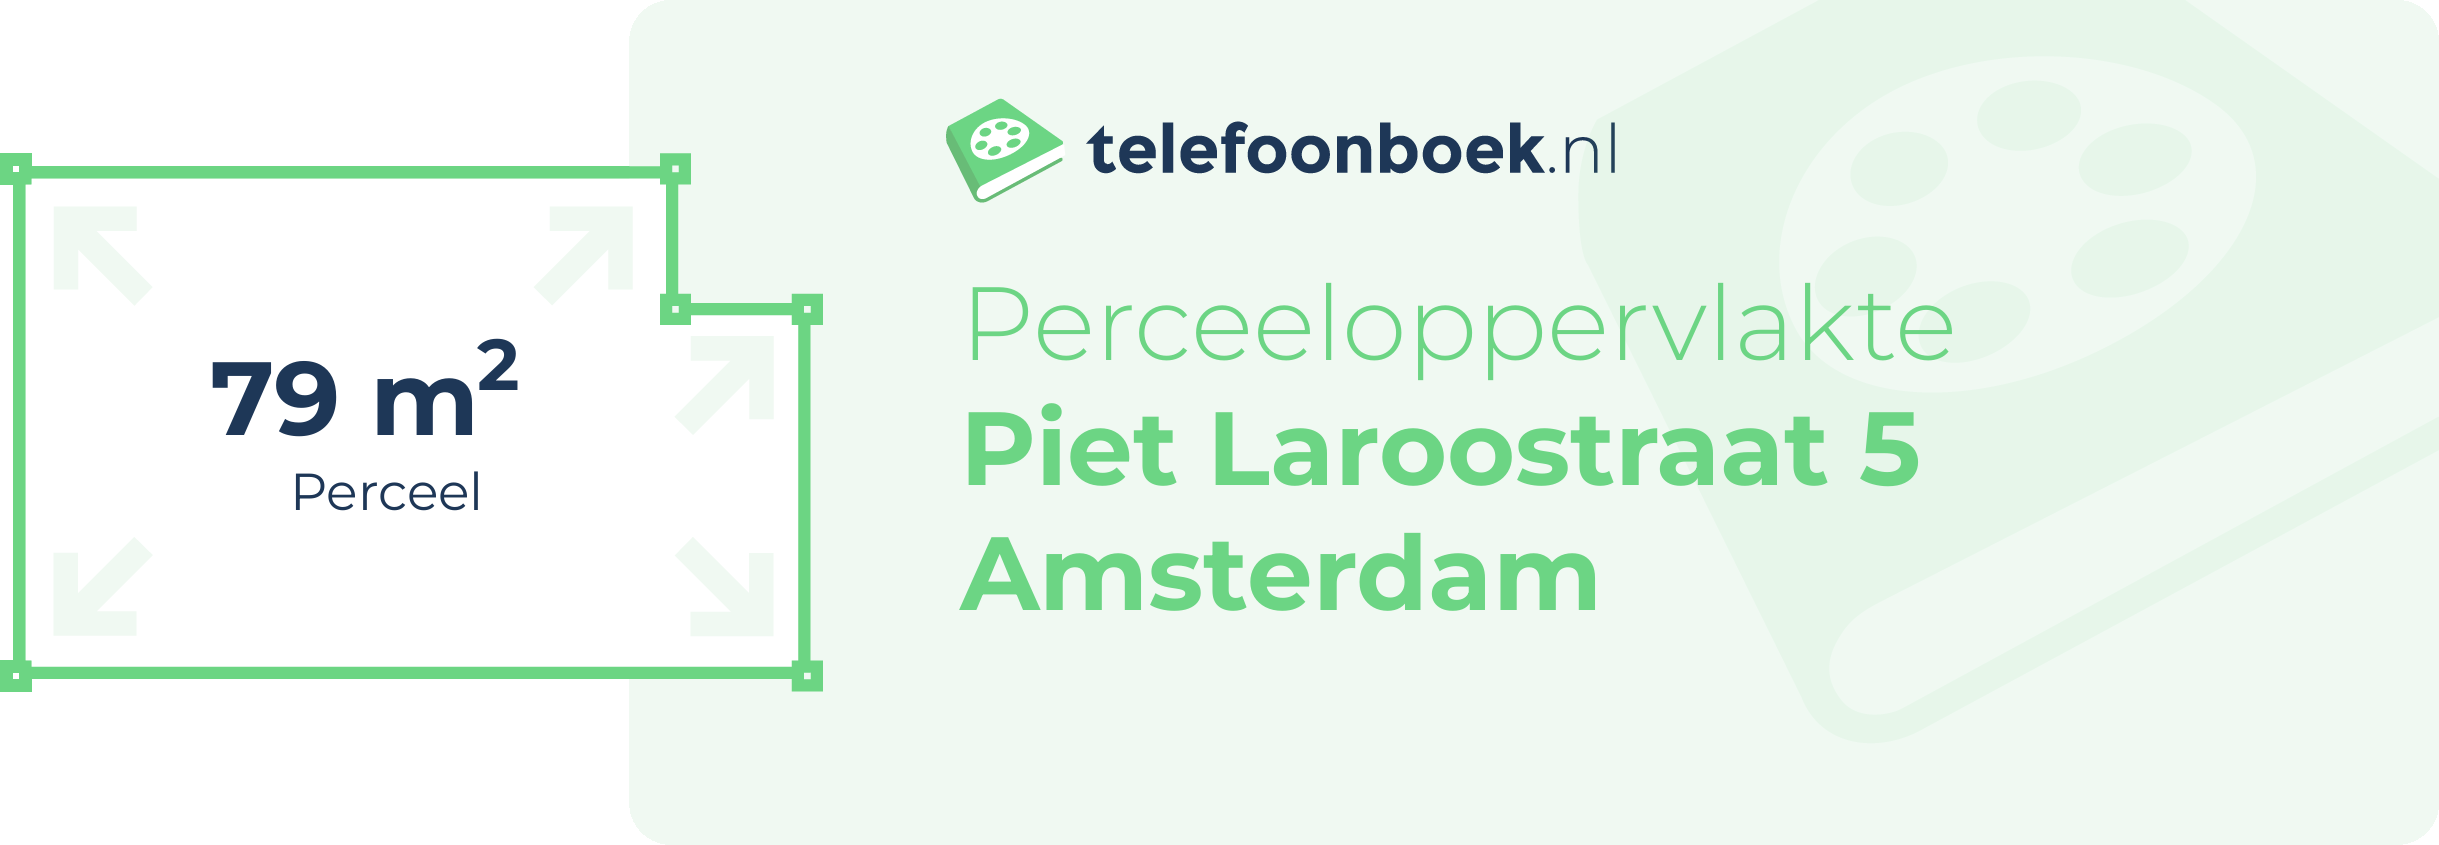 Perceeloppervlakte Piet Laroostraat 5 Amsterdam